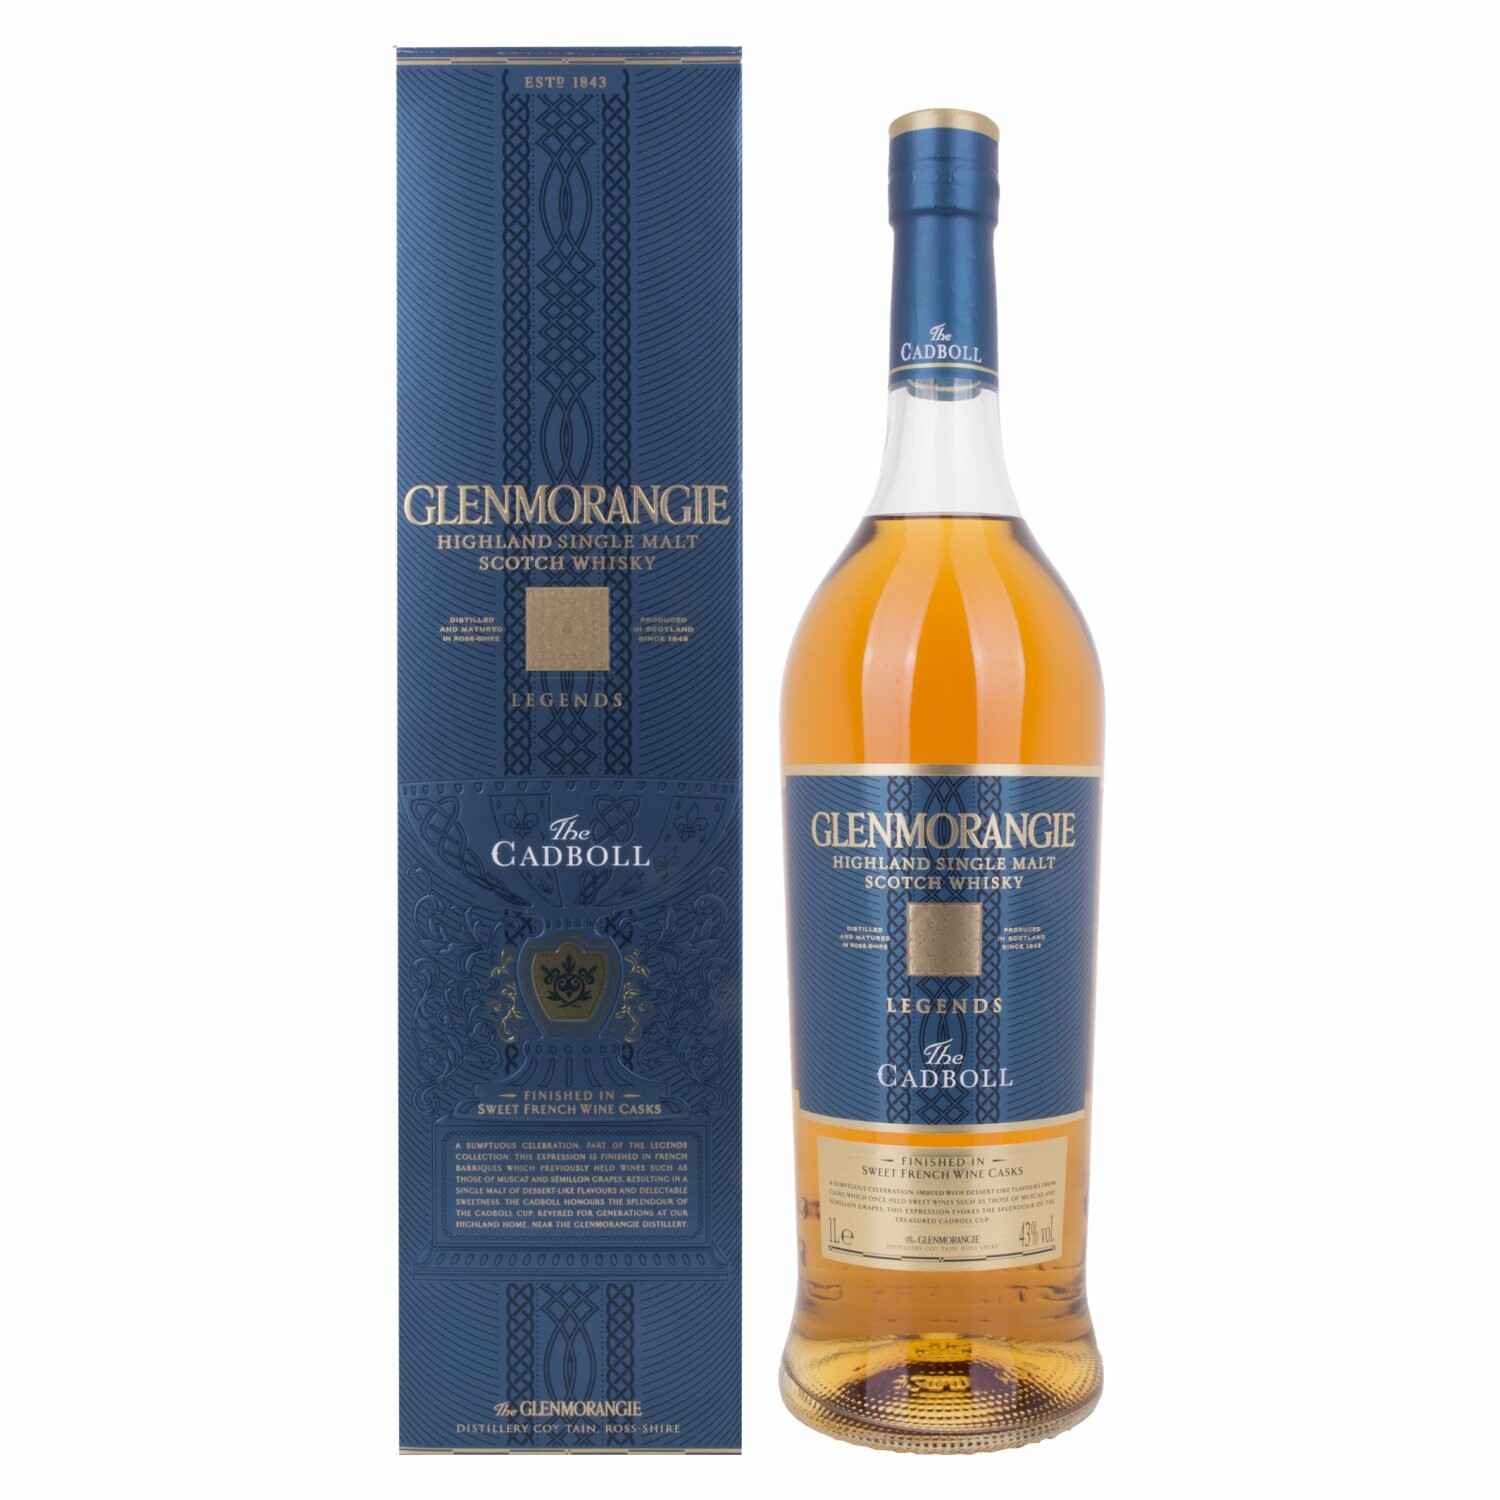 Glenmorangie Legends The CADBOLL Highland Single Malt 43% Vol. 1l in Giftbox